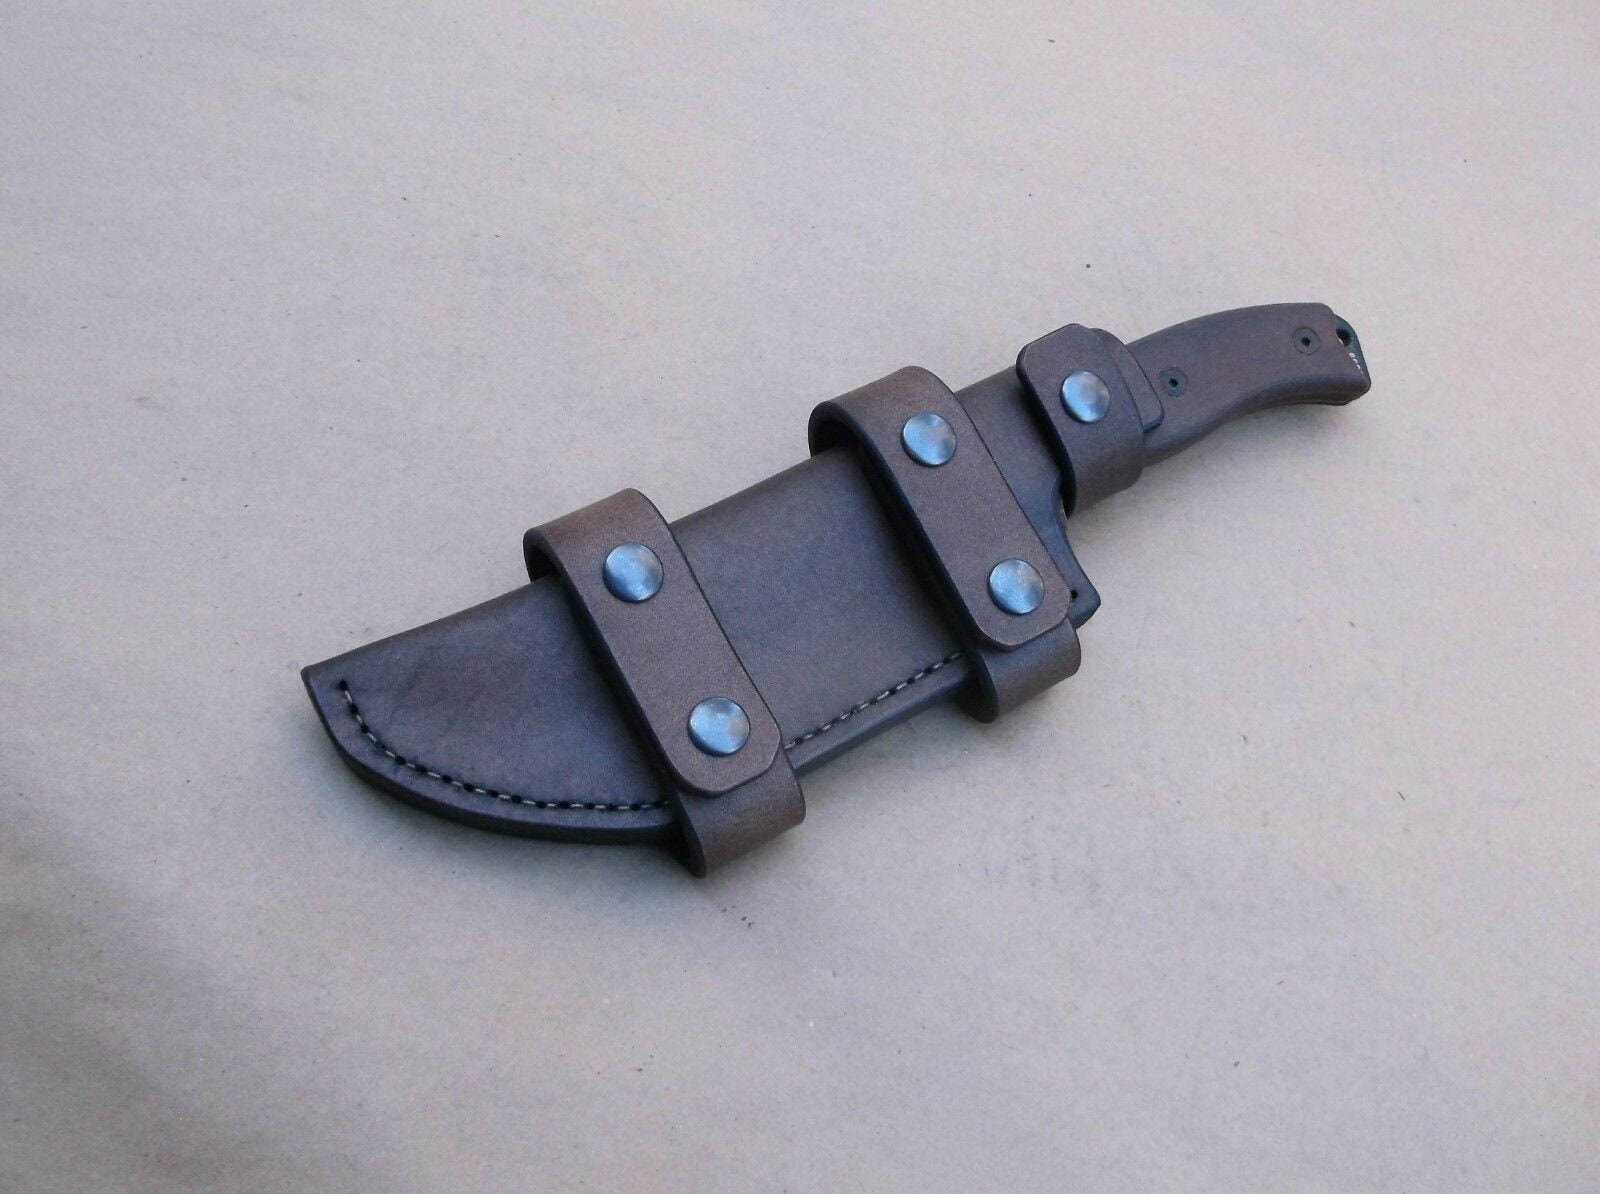 TKC: ESEE 6 Kydex Sheath w/ Slide Lock and Leather Backer, Black w